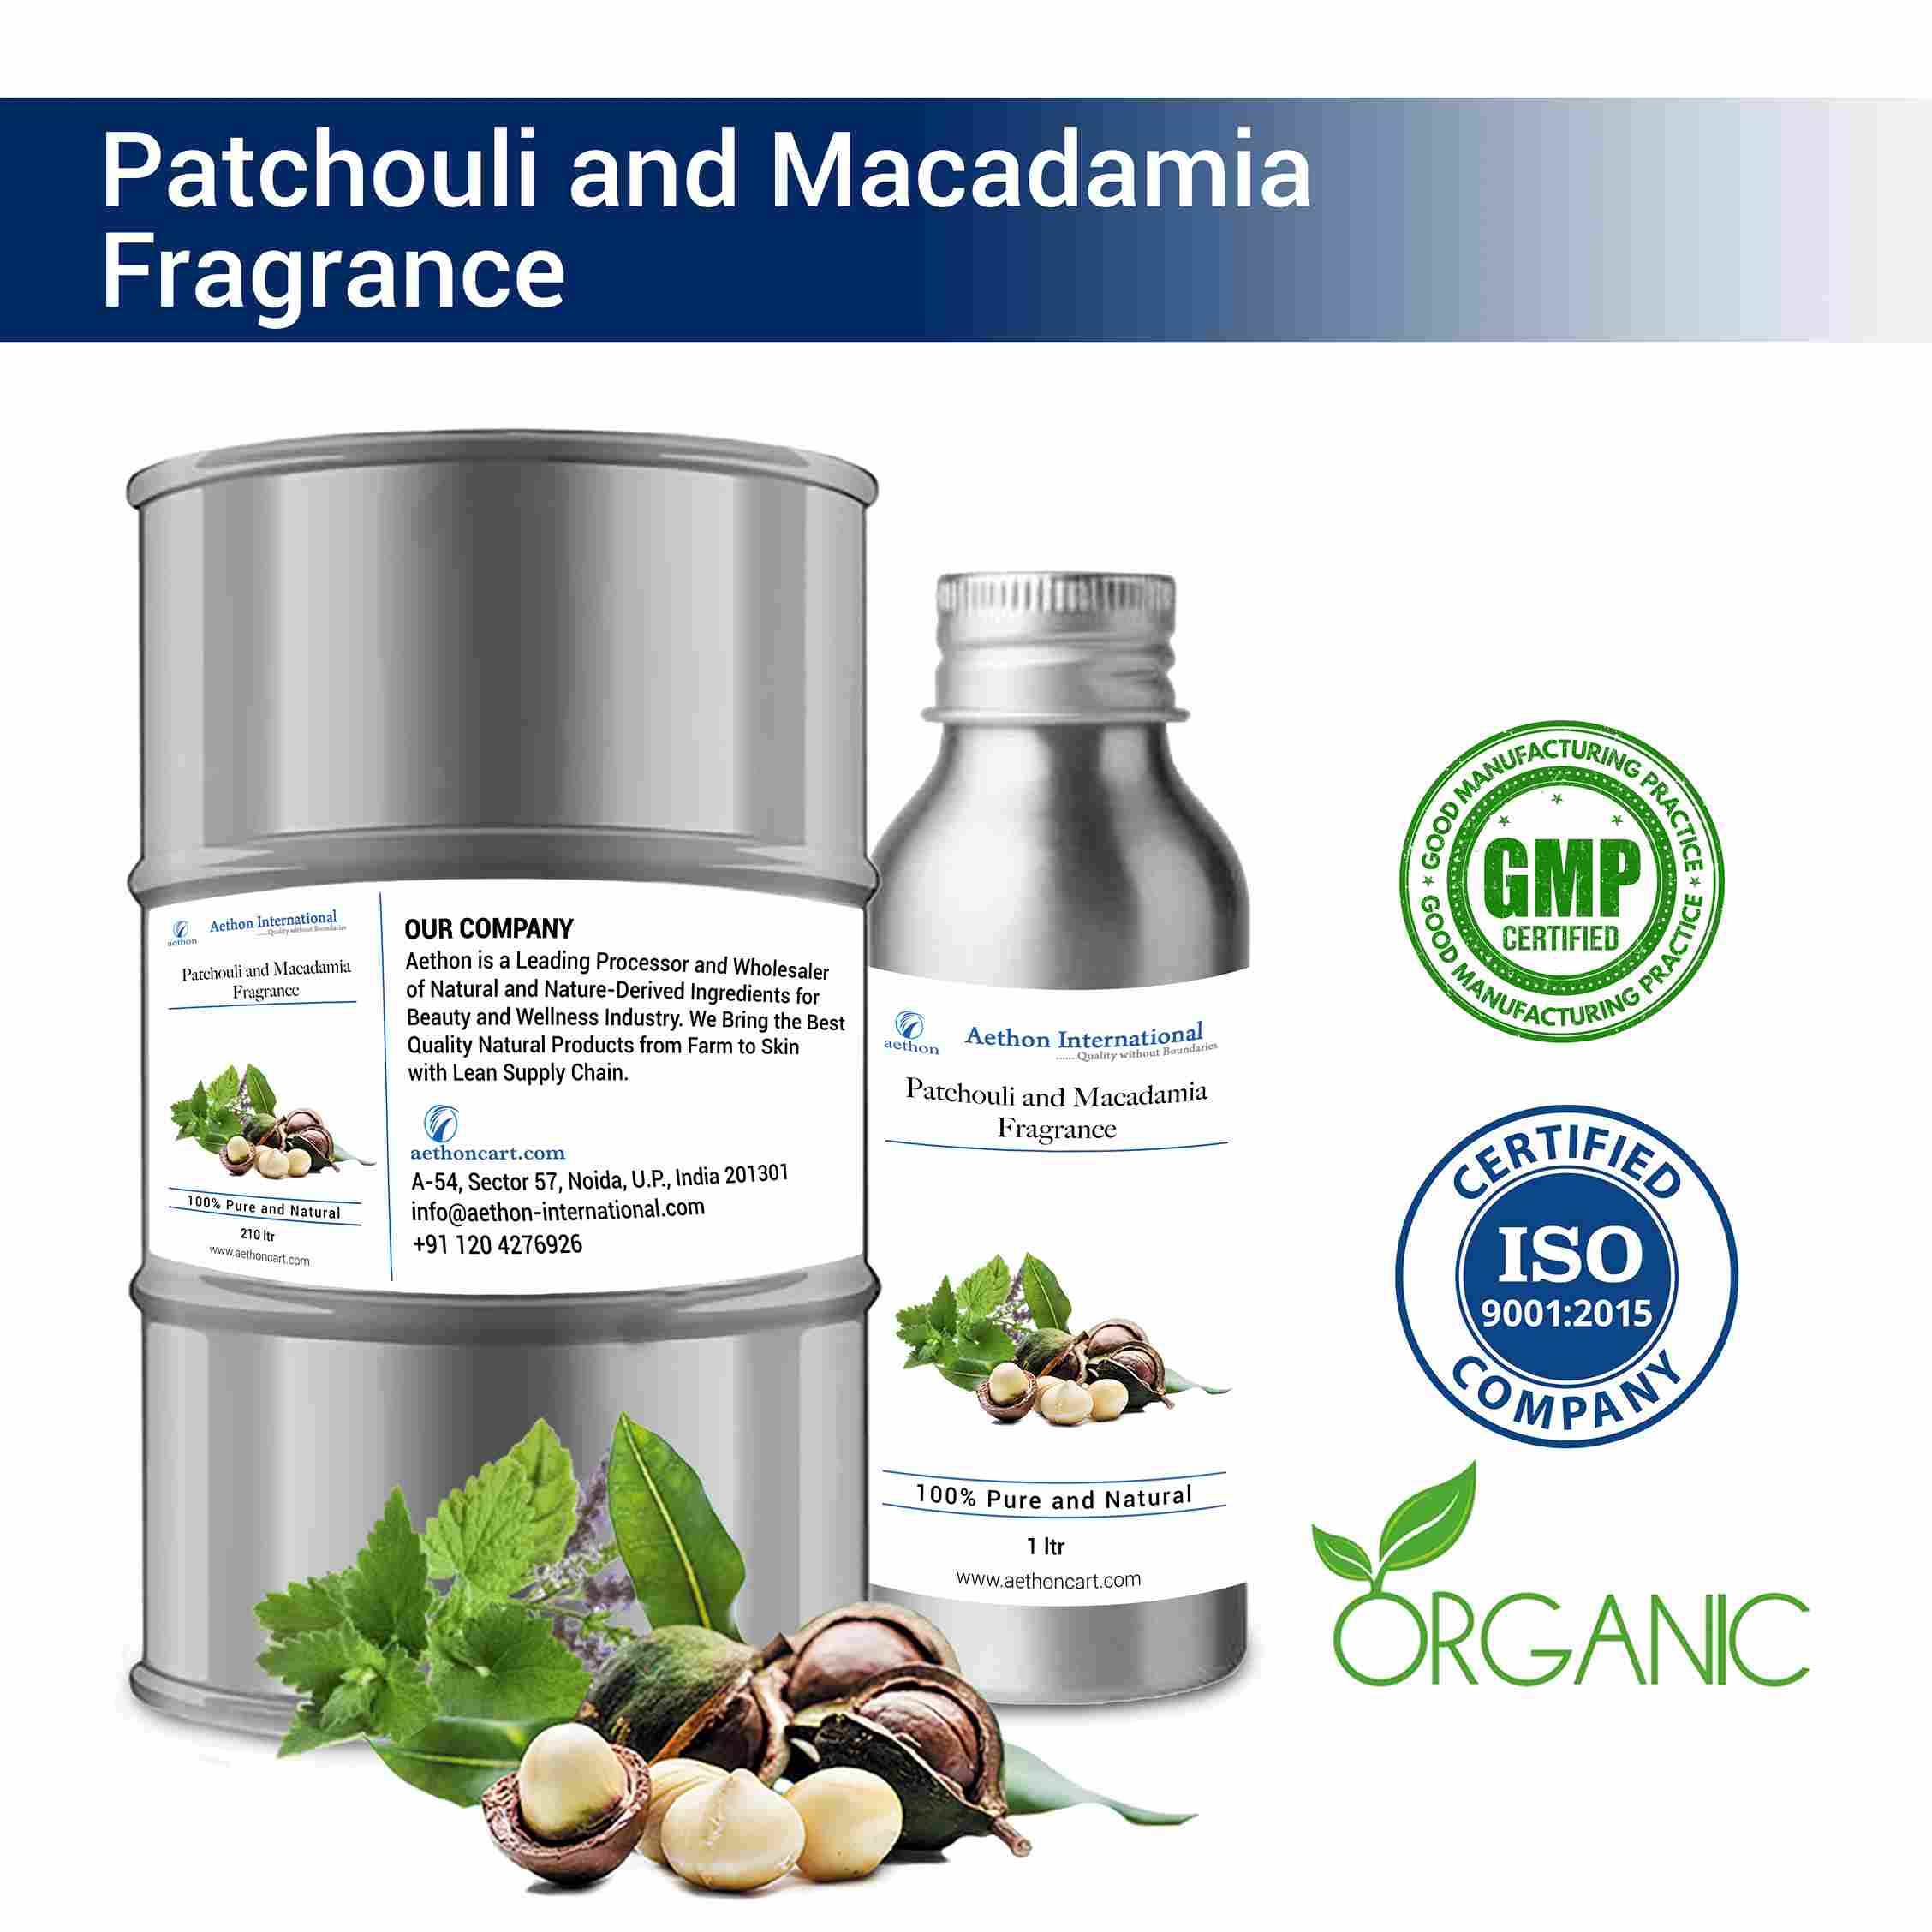 Patchouli and Macadamia Fragrance